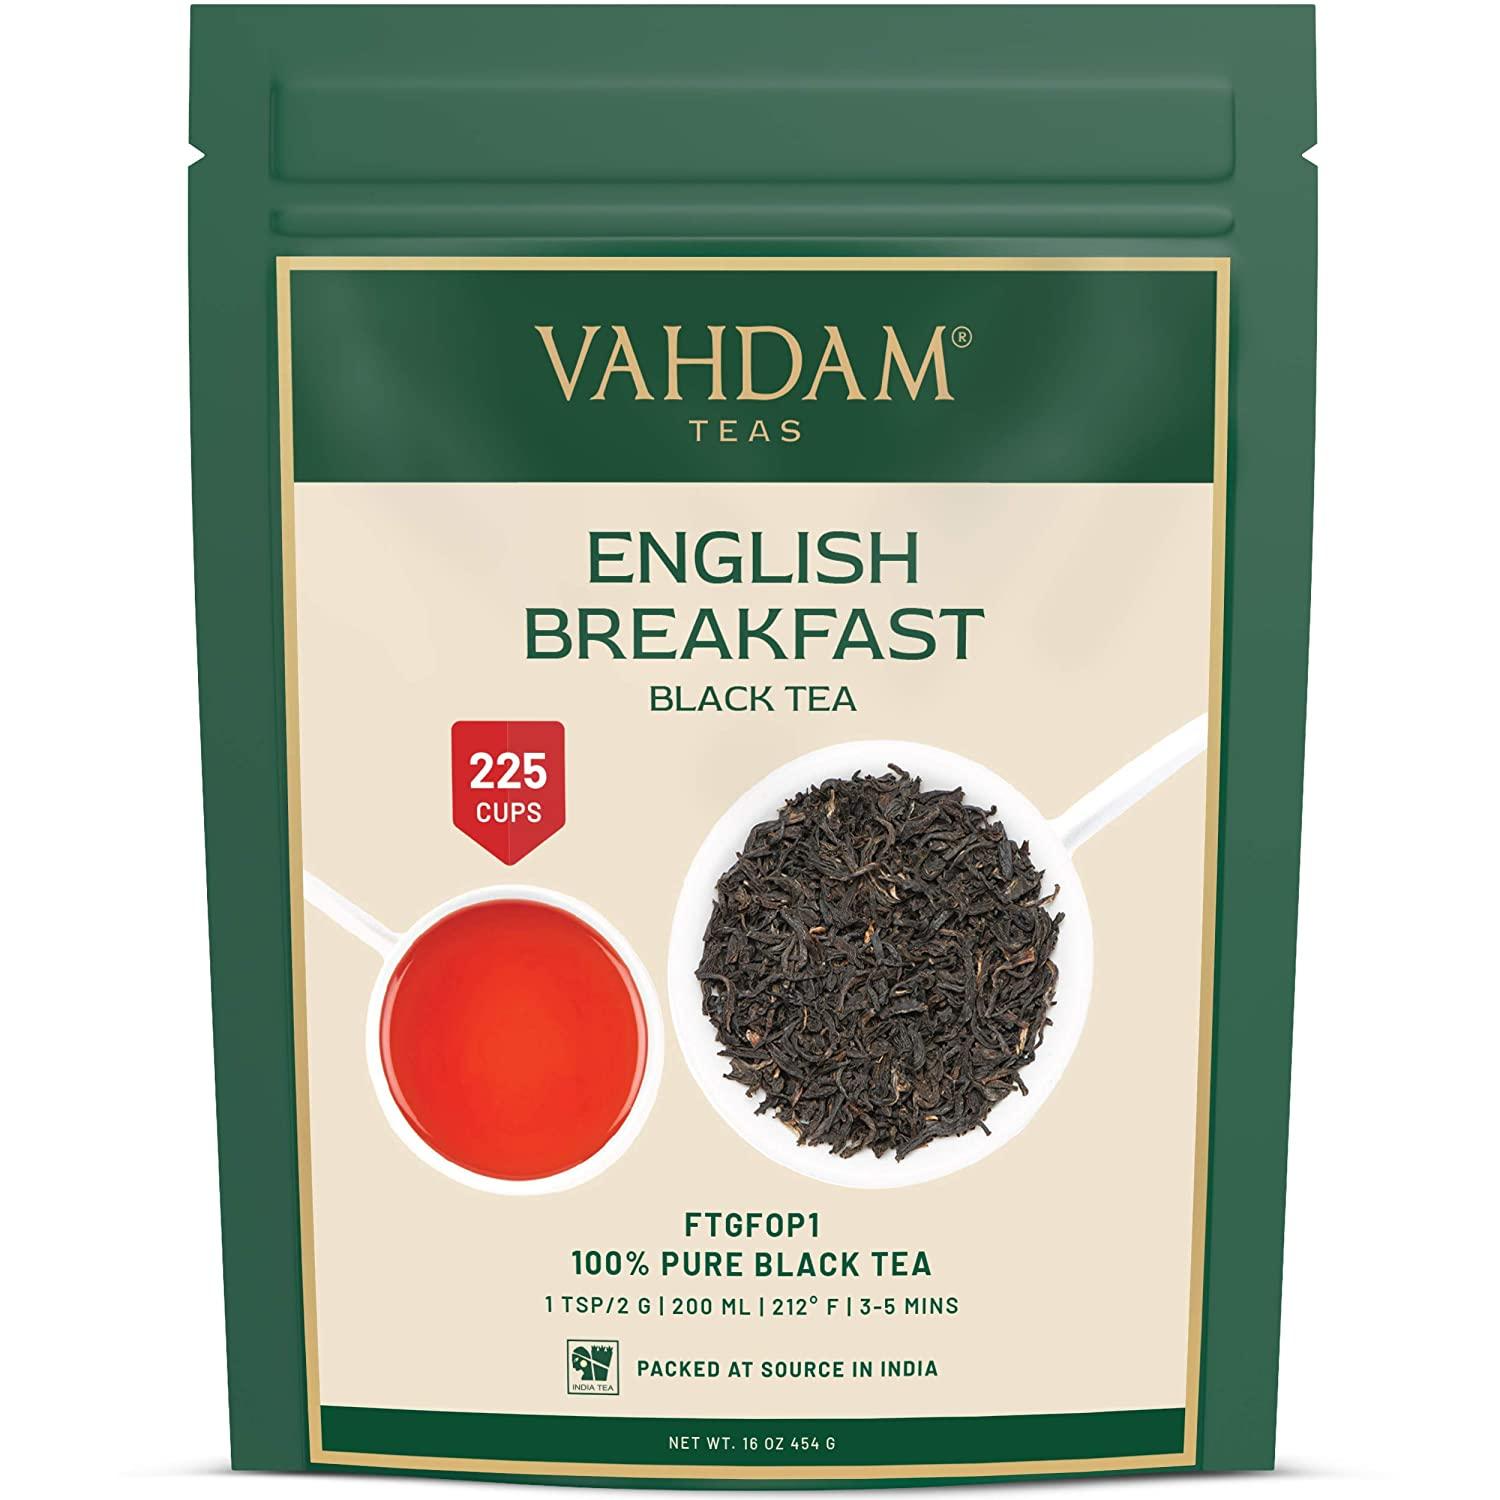 Vahdam Original English Breakfast Black Tea Leaves for $14.99